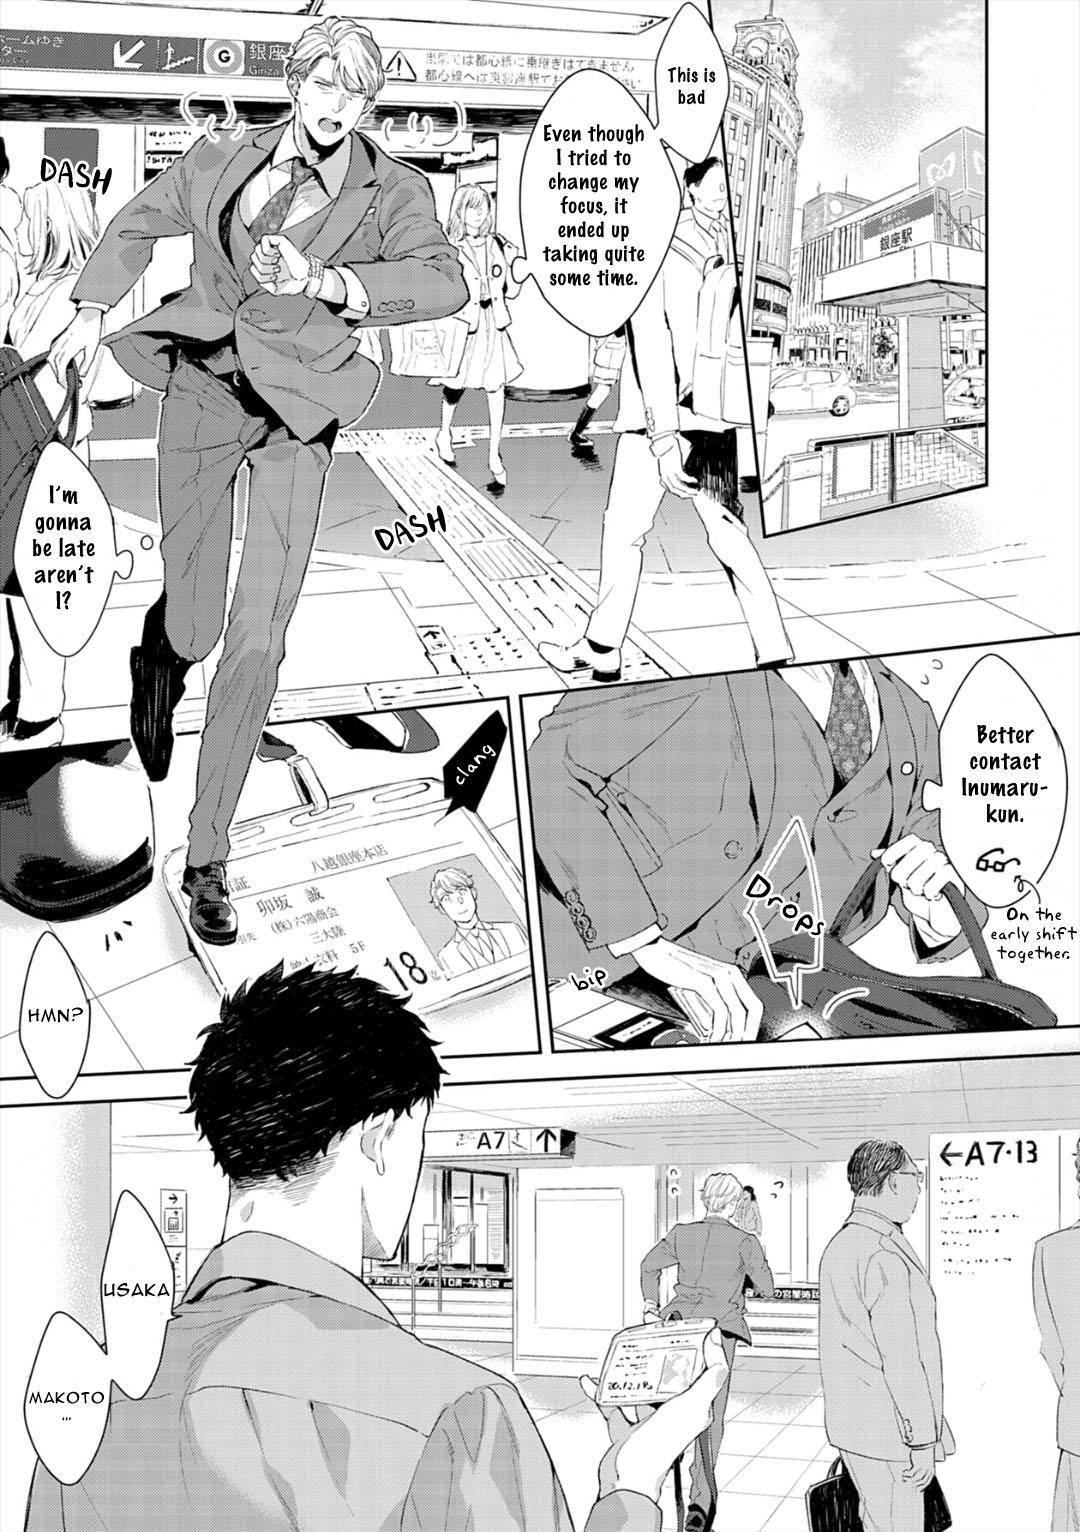 Iyarashii Mannequin Ch.8 Page 9 - Mangago